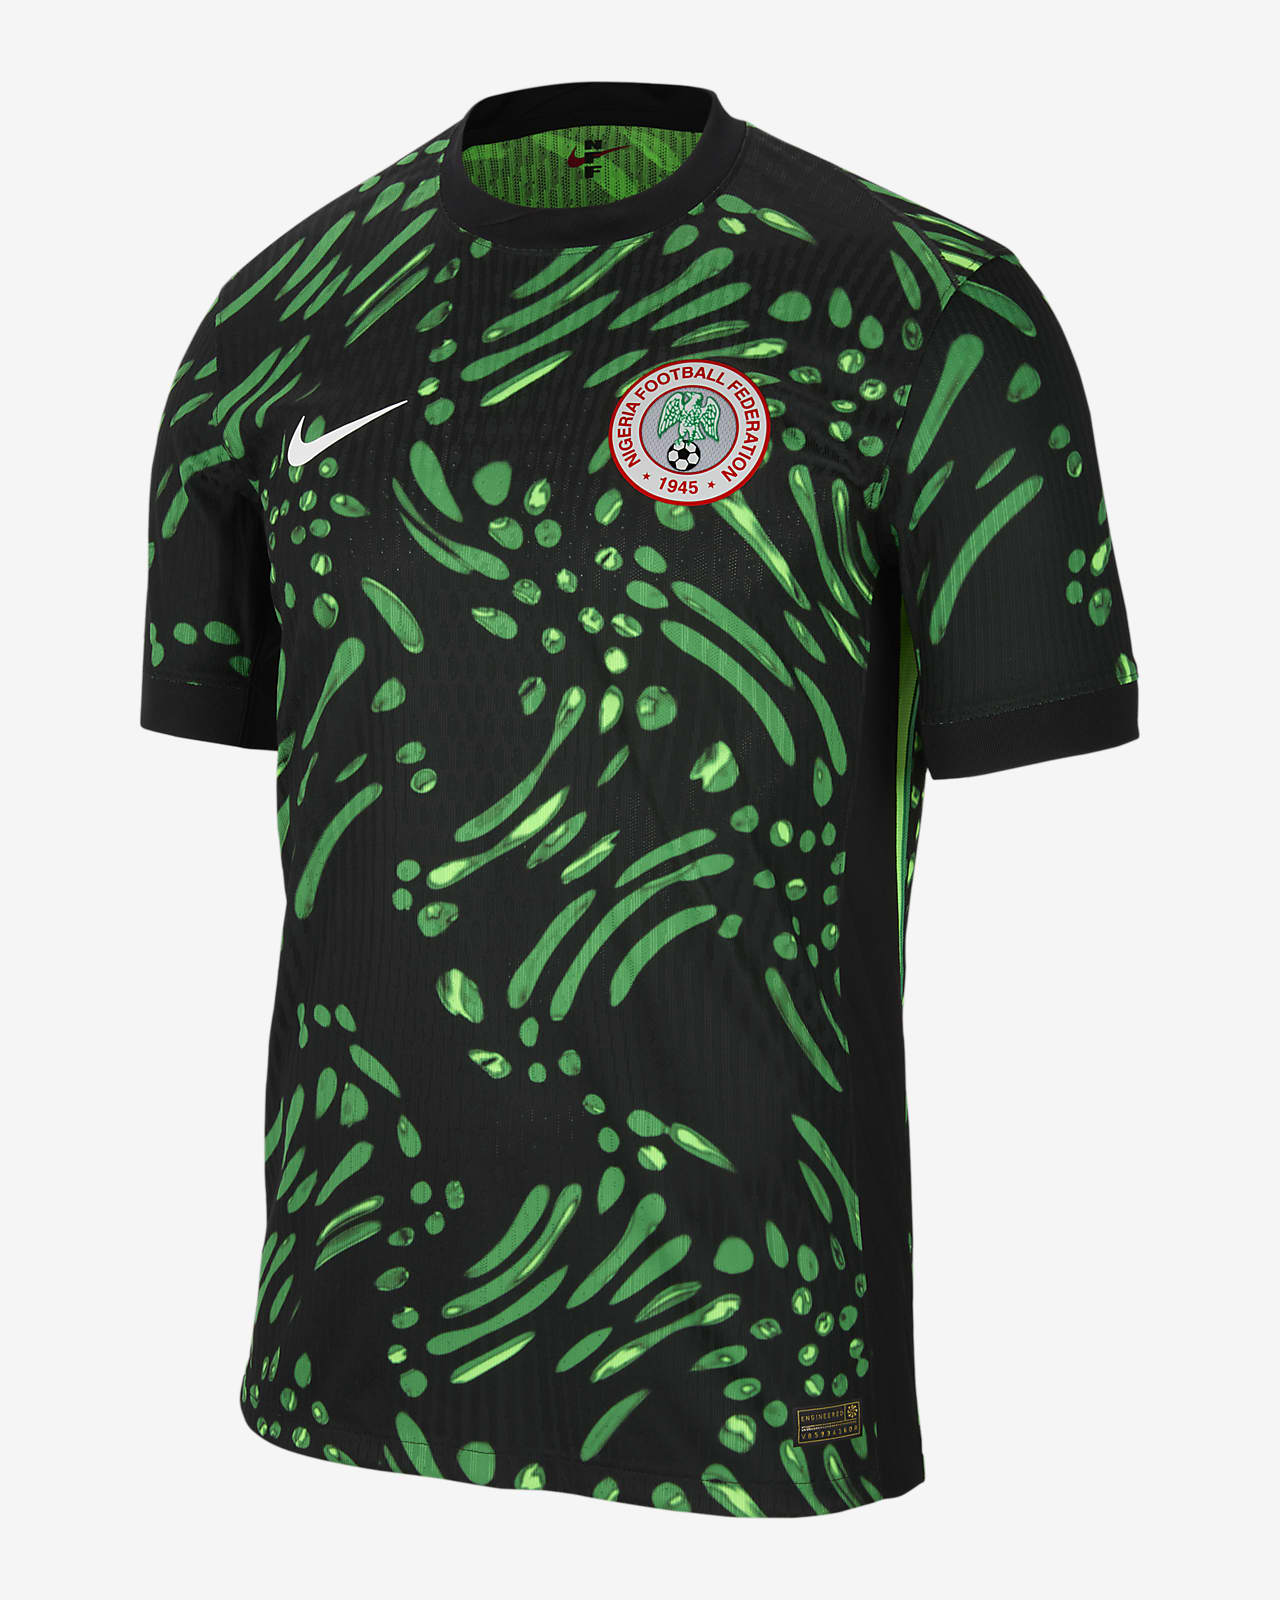 Nigeria's Away Kit